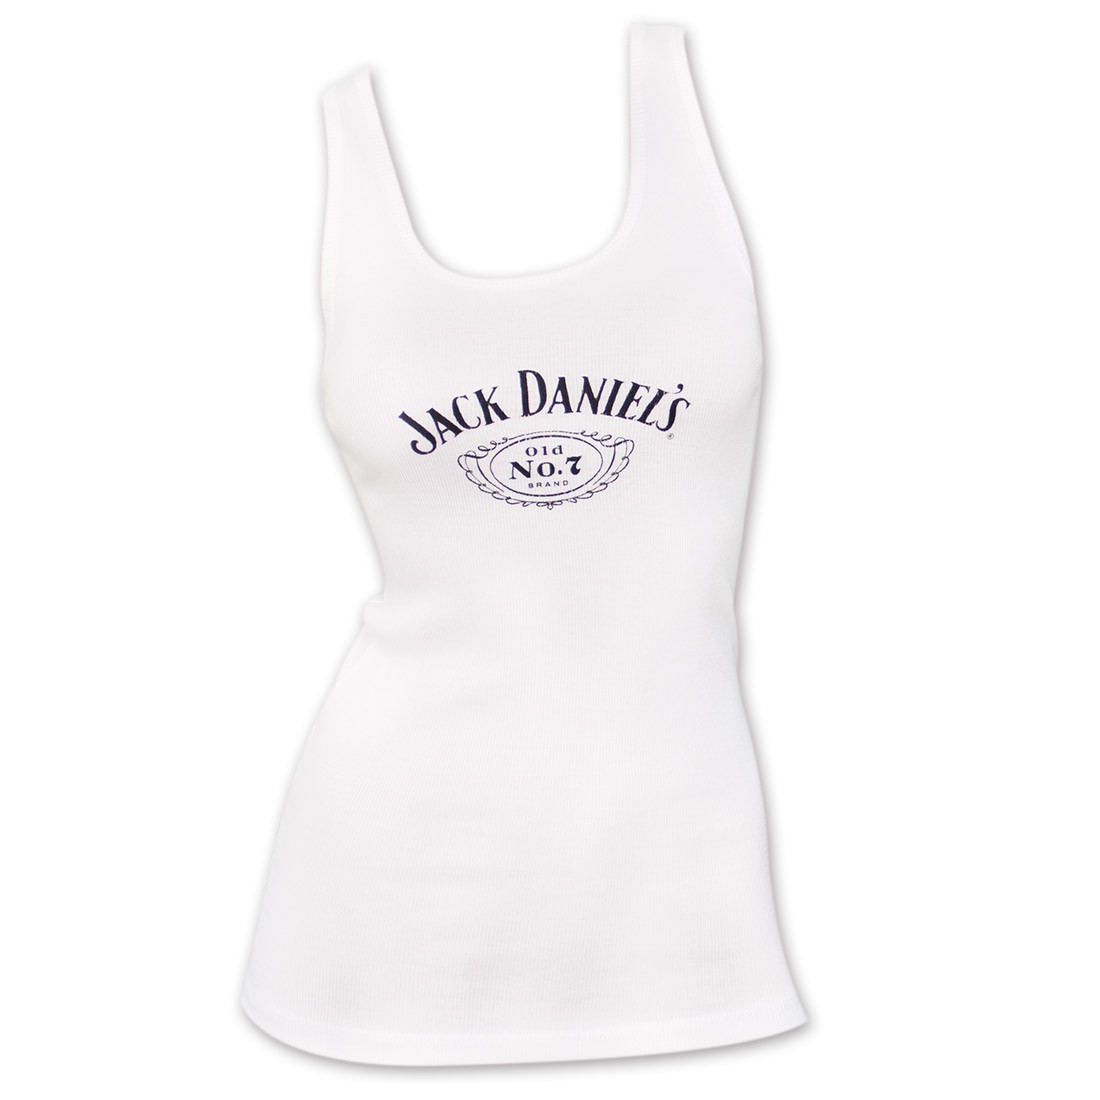 Jack Daniel's Old No. 7 Label Women's White Tank Top